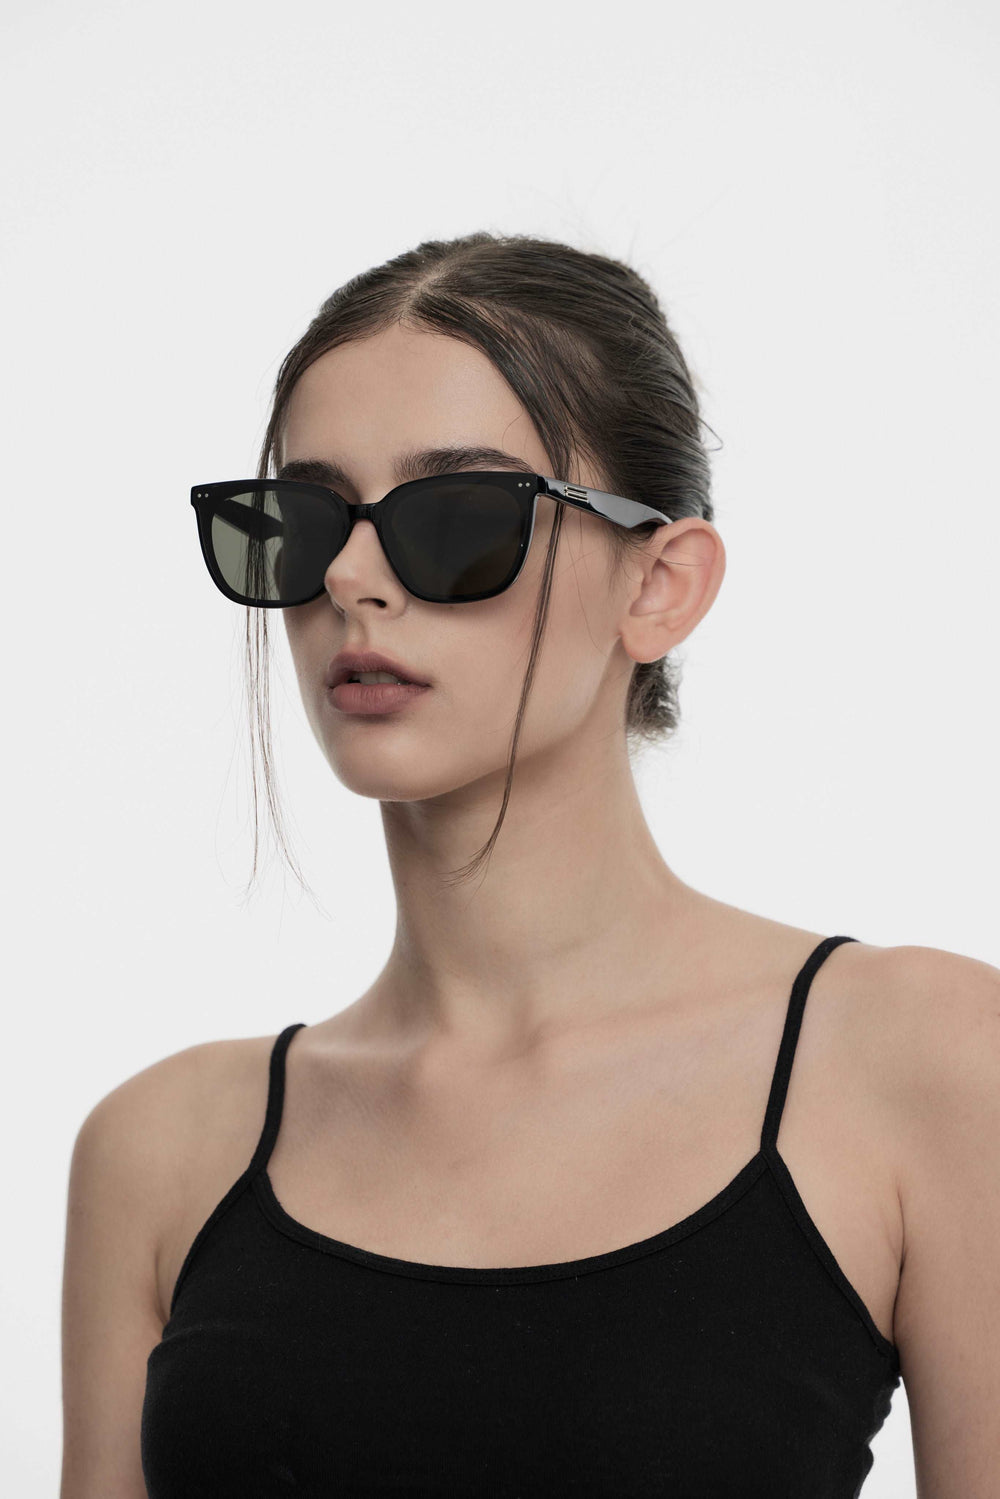 Model of her side face looking down wearing Artist Kpop Sunglasses from Mercury Retrograde